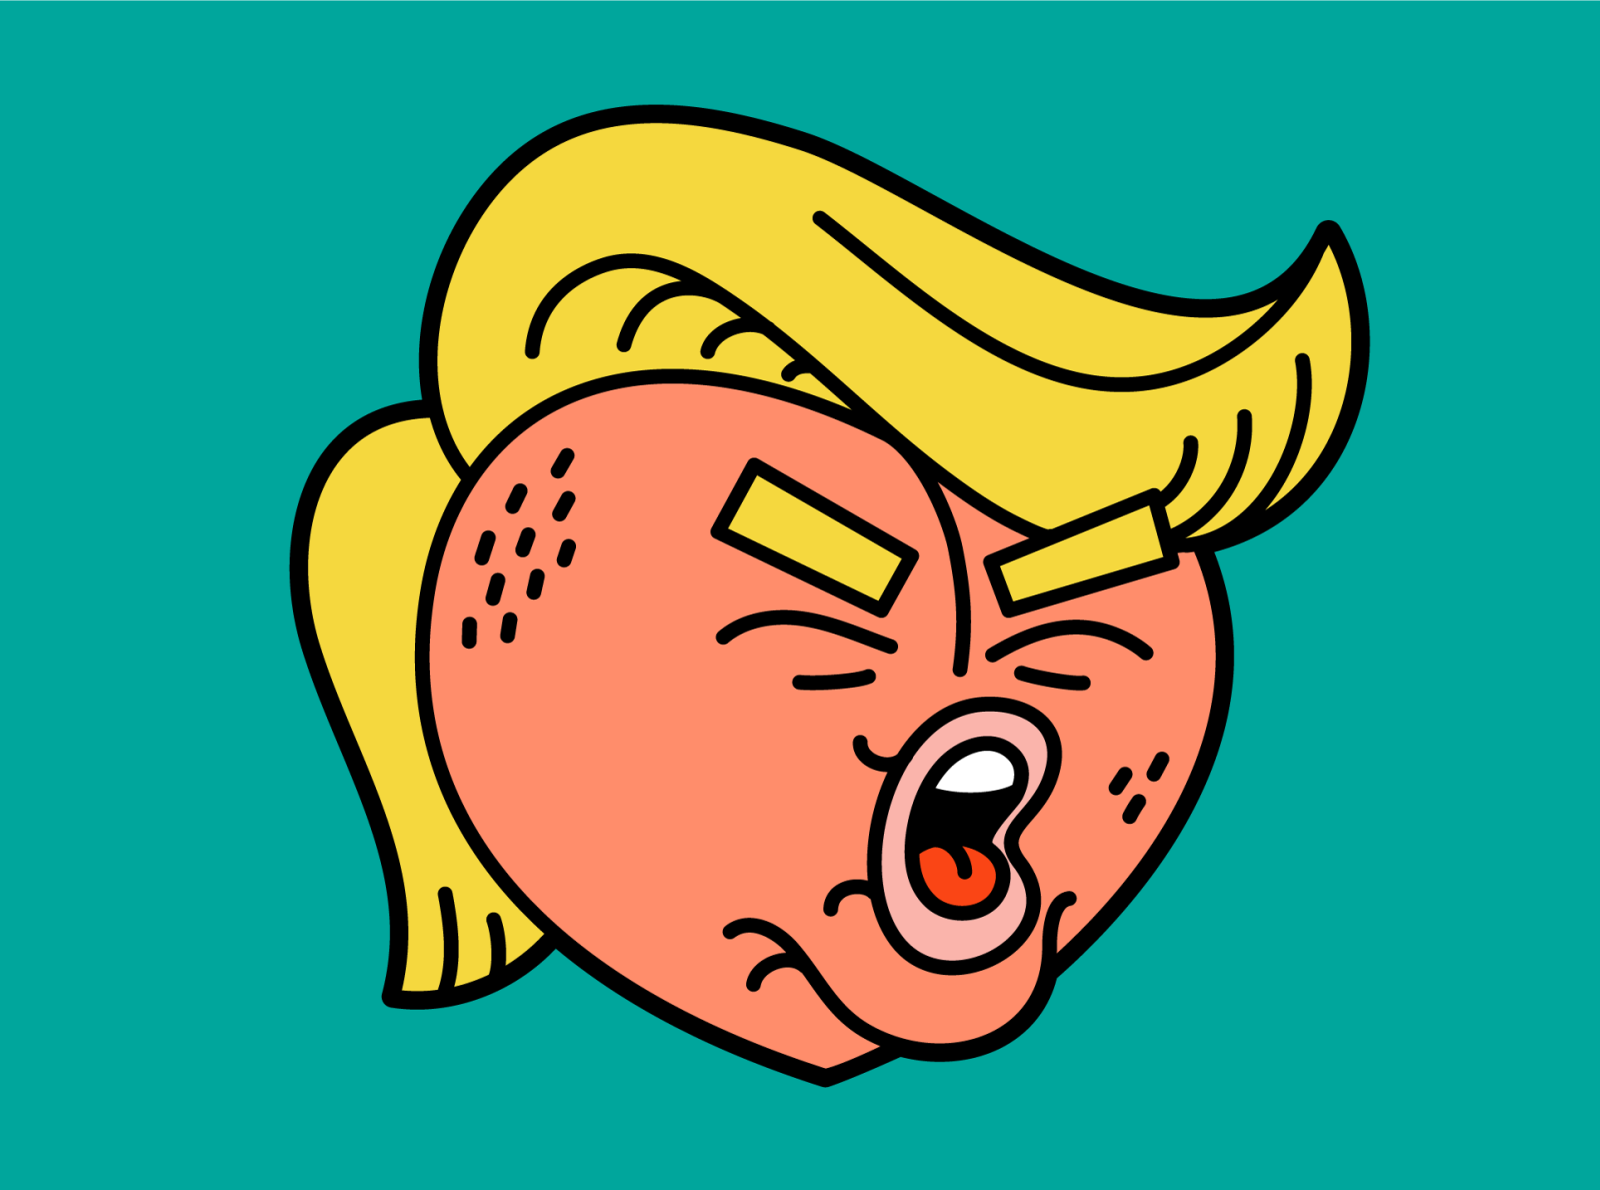 DONALD Trump peach    IMPEACH the peach strong frig magnet or magnet pin 